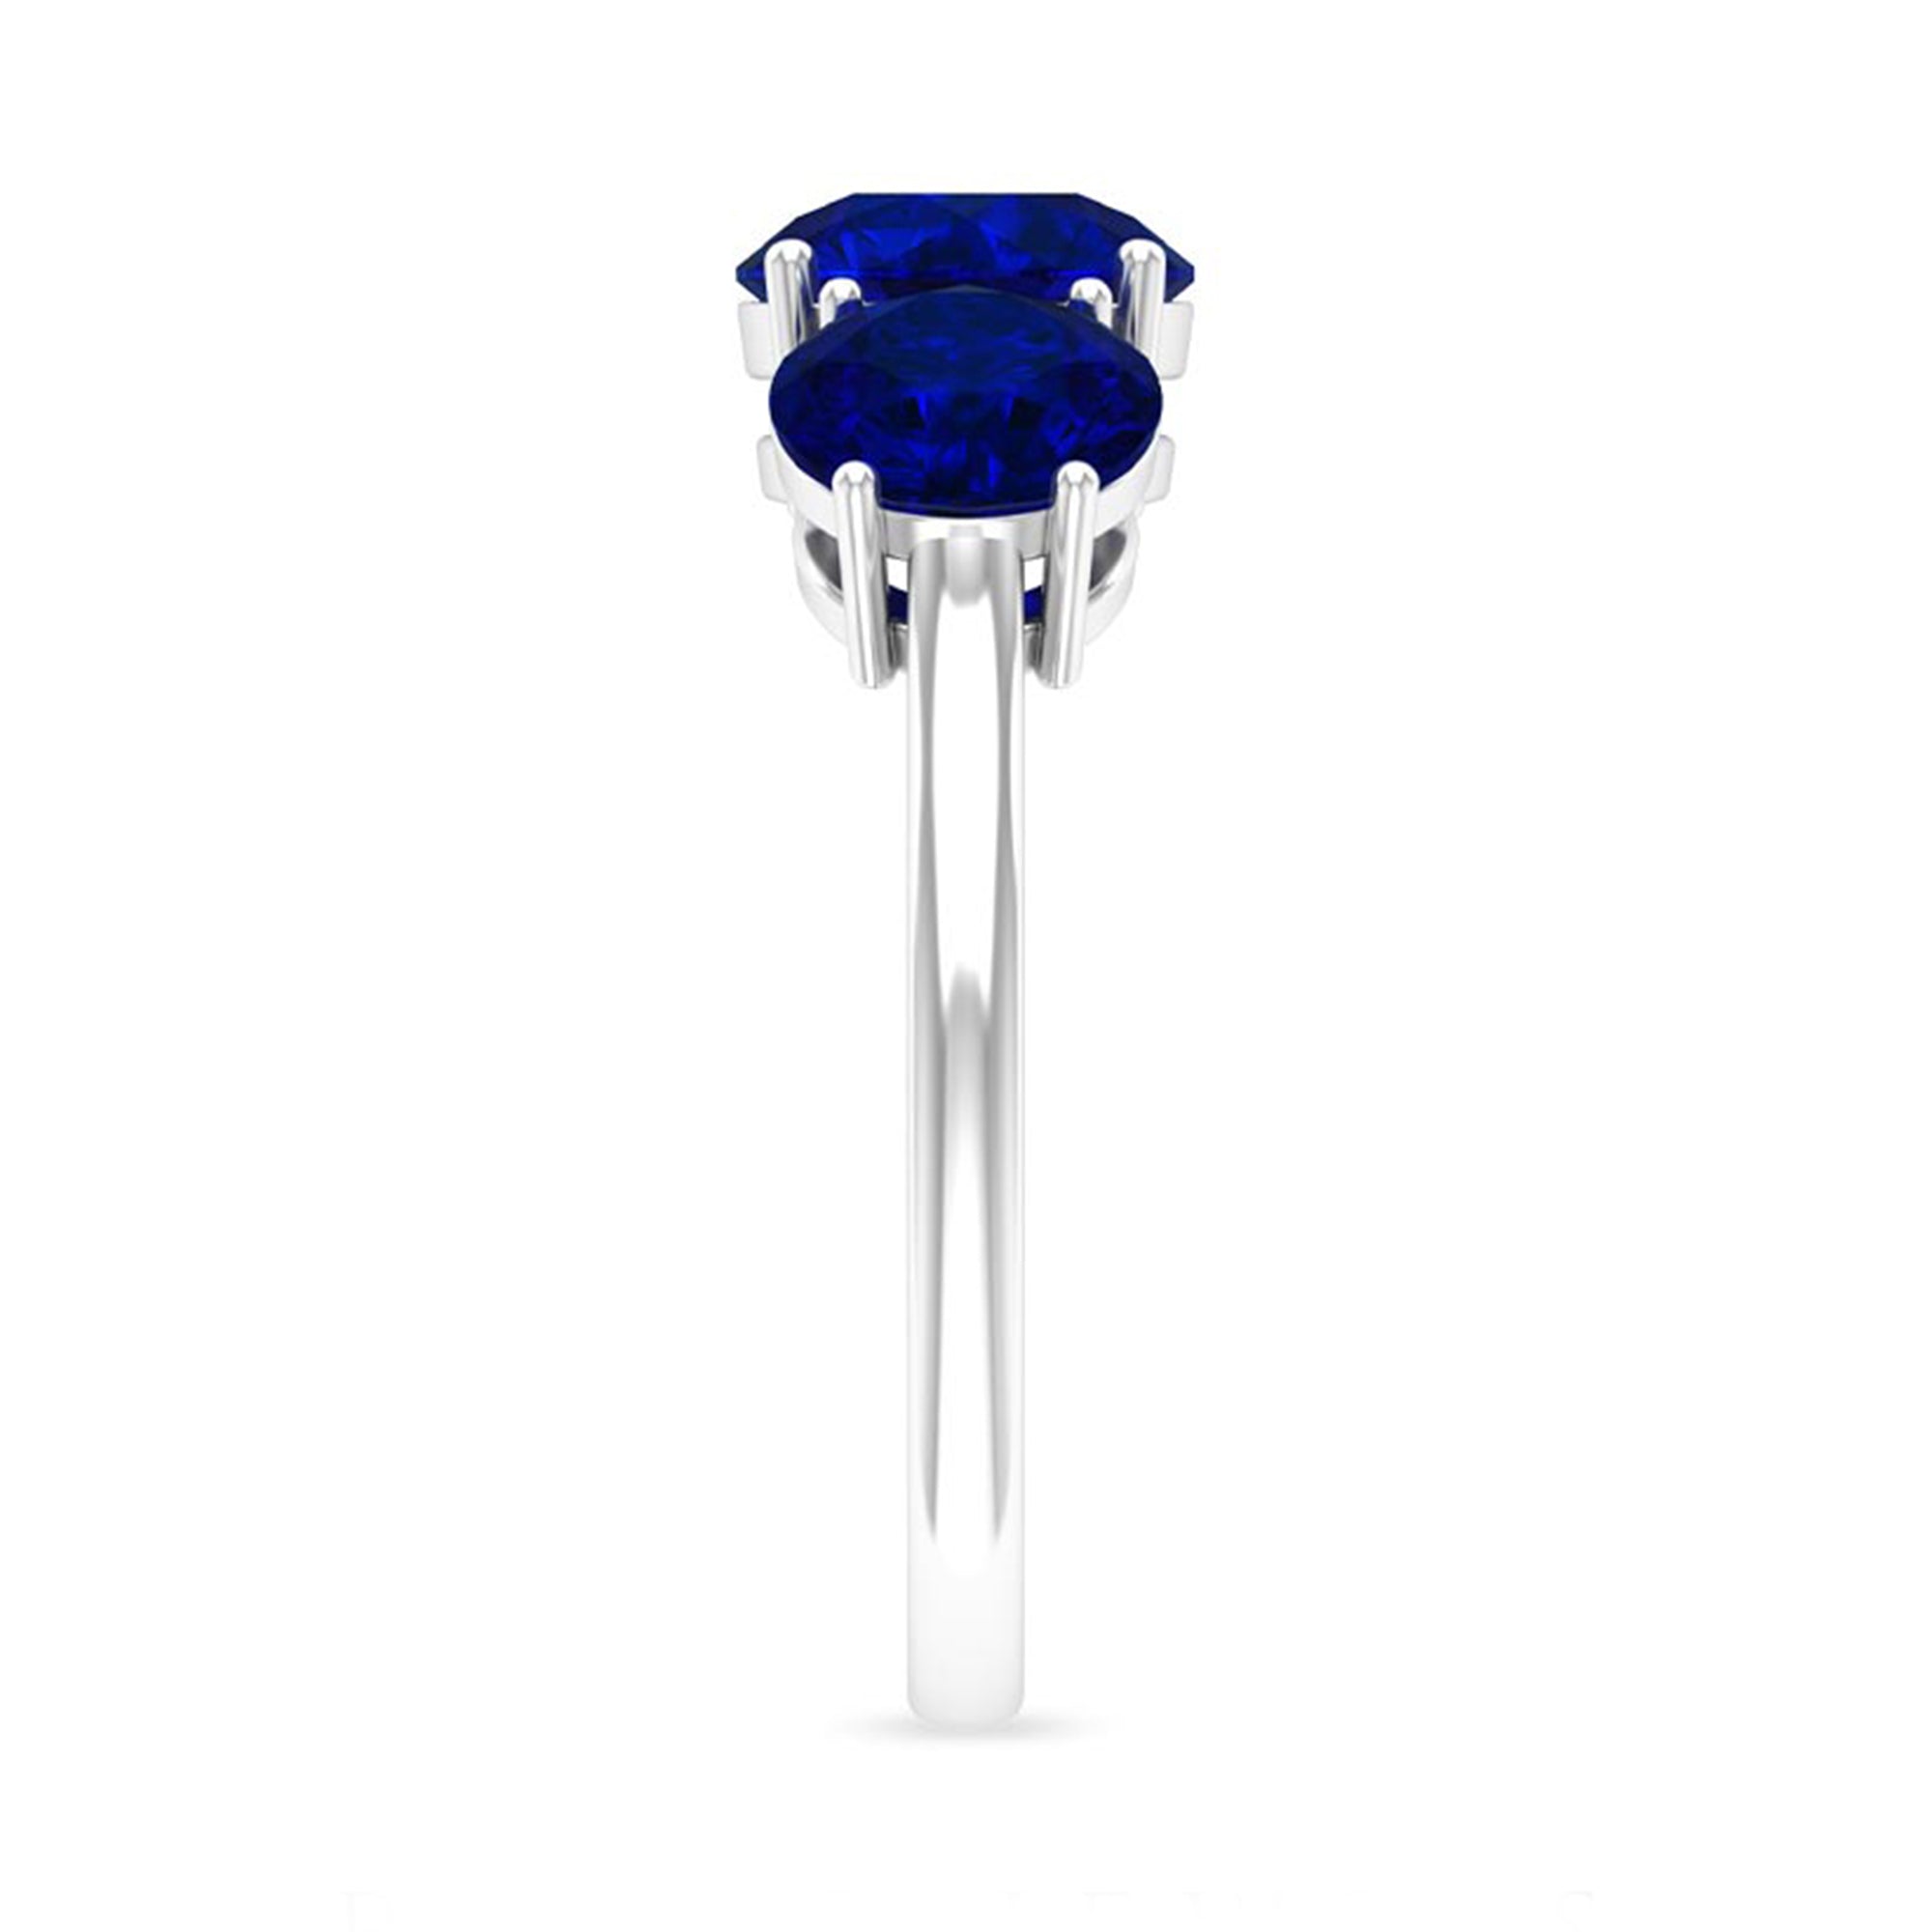 3.75 CT Created Blue Sapphire Three Stone Engagement Ring Lab Created Blue Sapphire - ( AAAA ) - Quality - Rosec Jewels